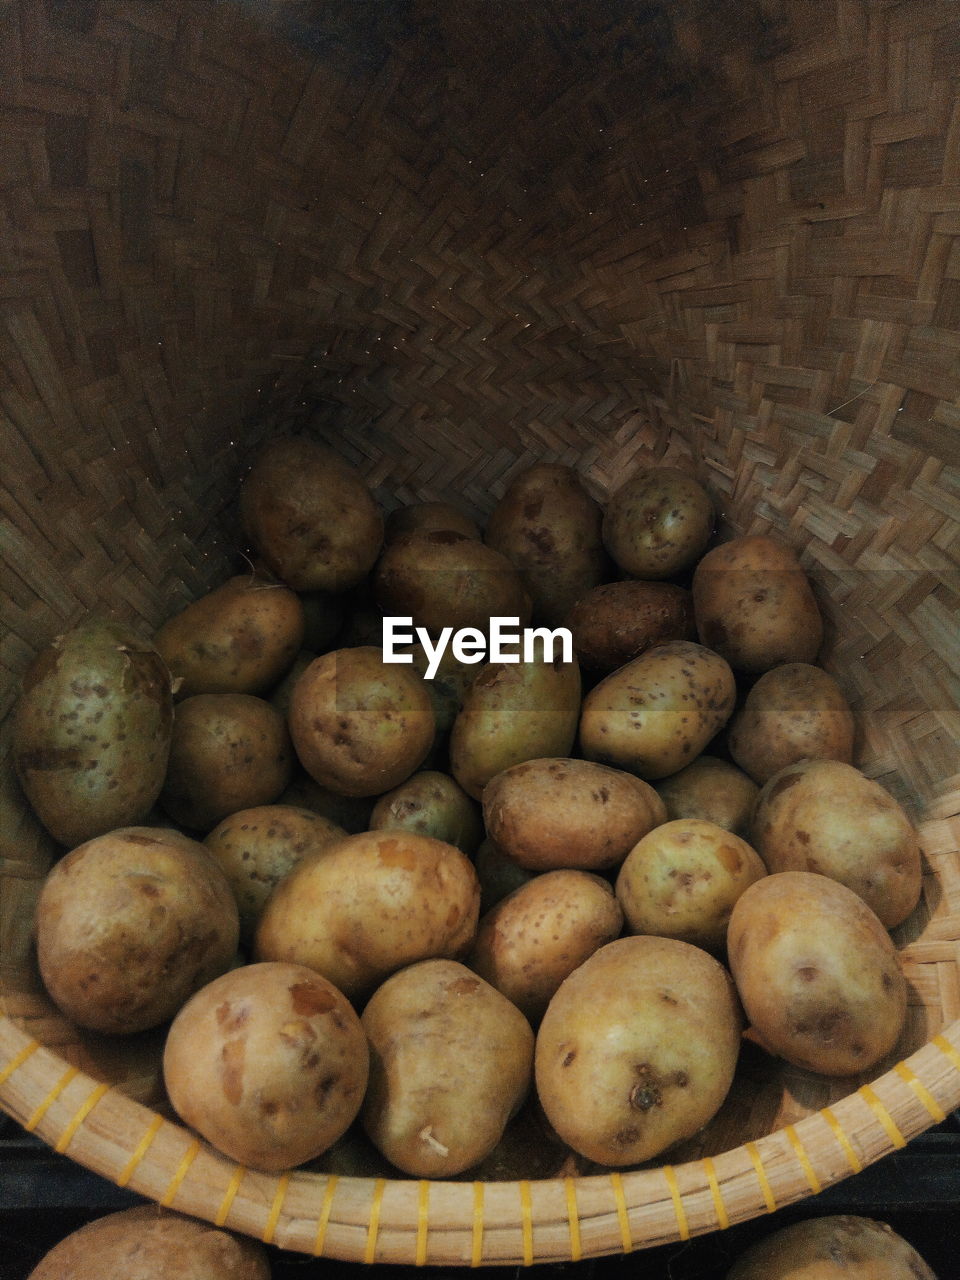 Raw potatoes in basket